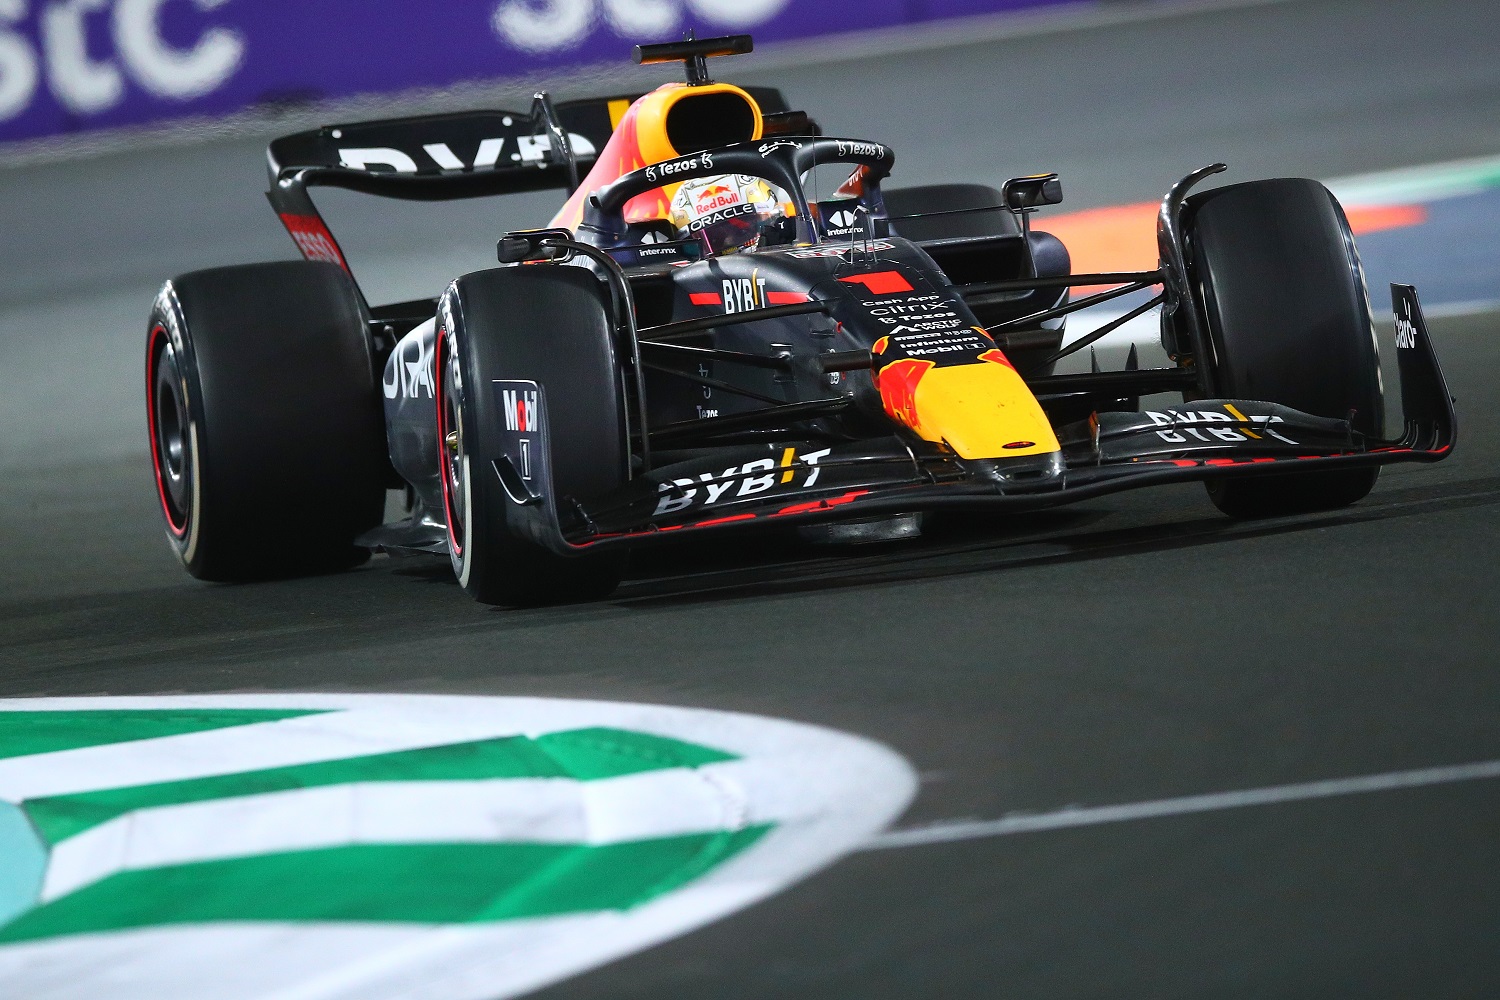 :Max Verstappen during the Formula 1 Grand Prix of Saudi Arabia at the Jeddah Corniche Circuit on March 27, 2022 in Jeddah, Saudi Arabia